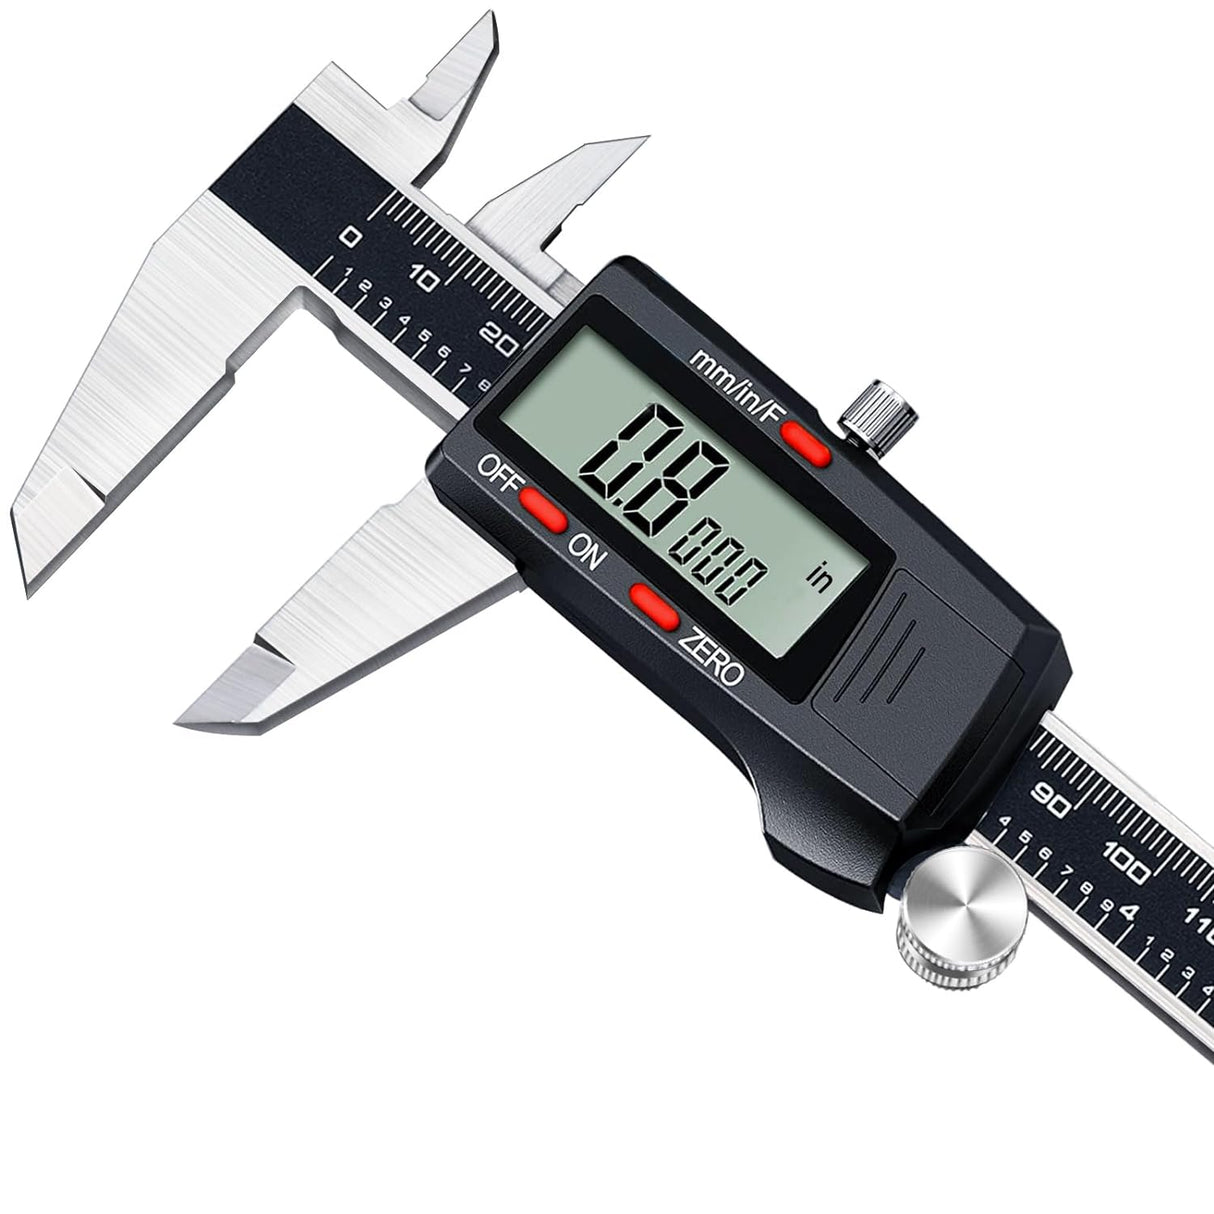 IHN Caliper Measuring Tool, Digital Micrometer Caliper Too Stainless Steel